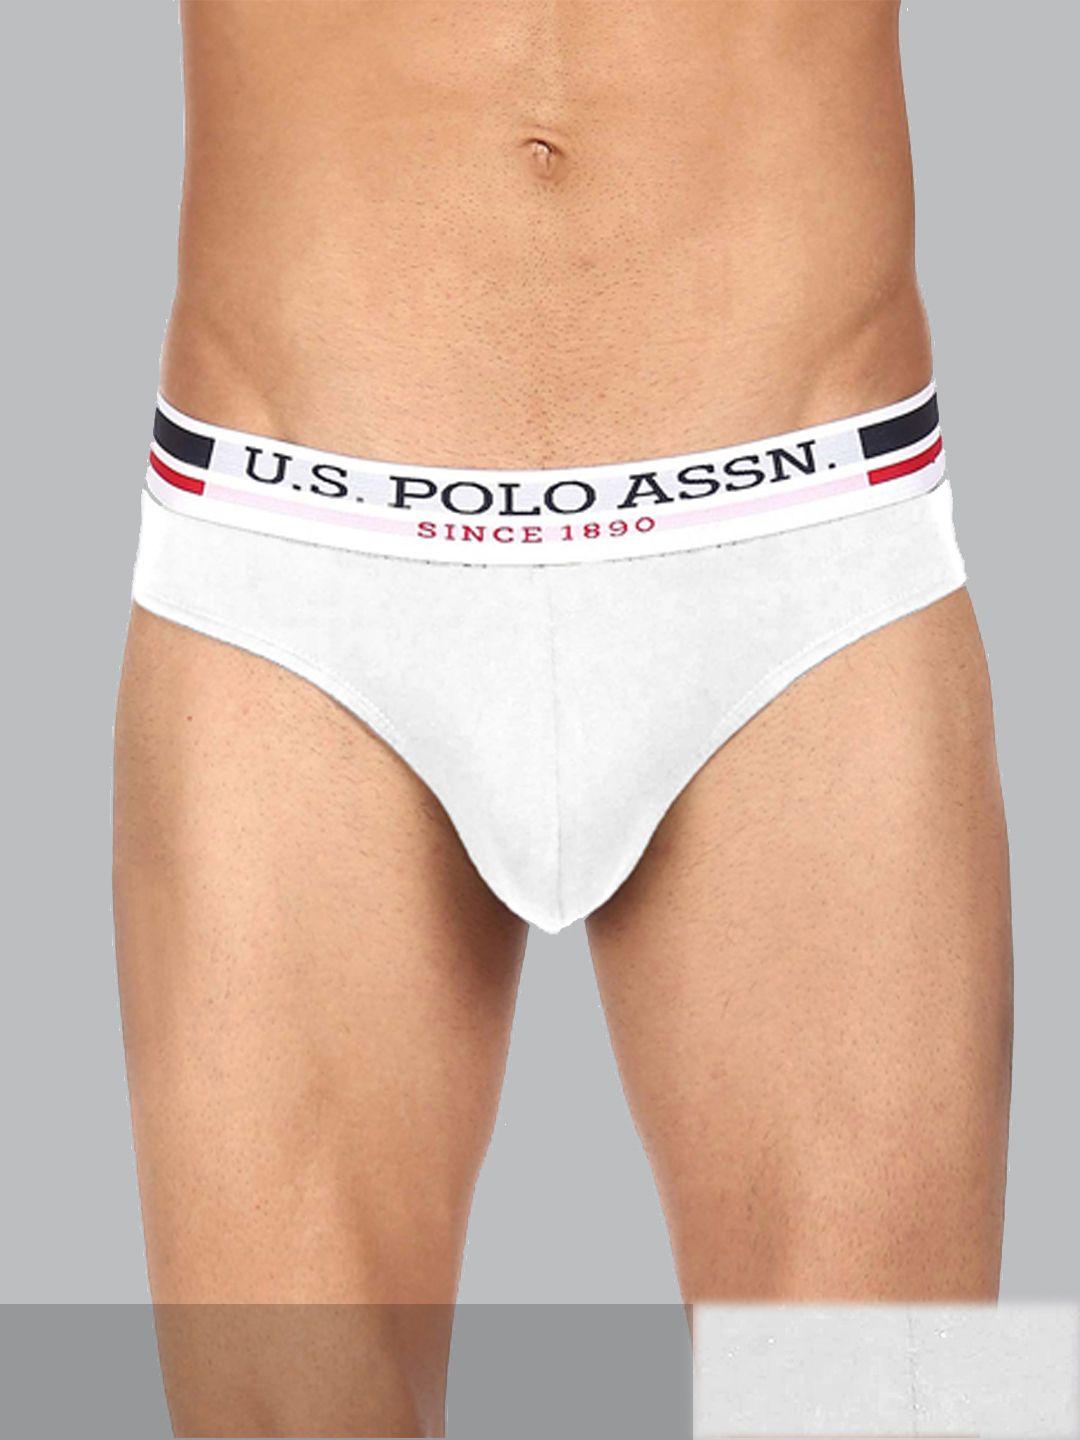 u.s.-polo-assn.-men-white-solid-cotton-briefs